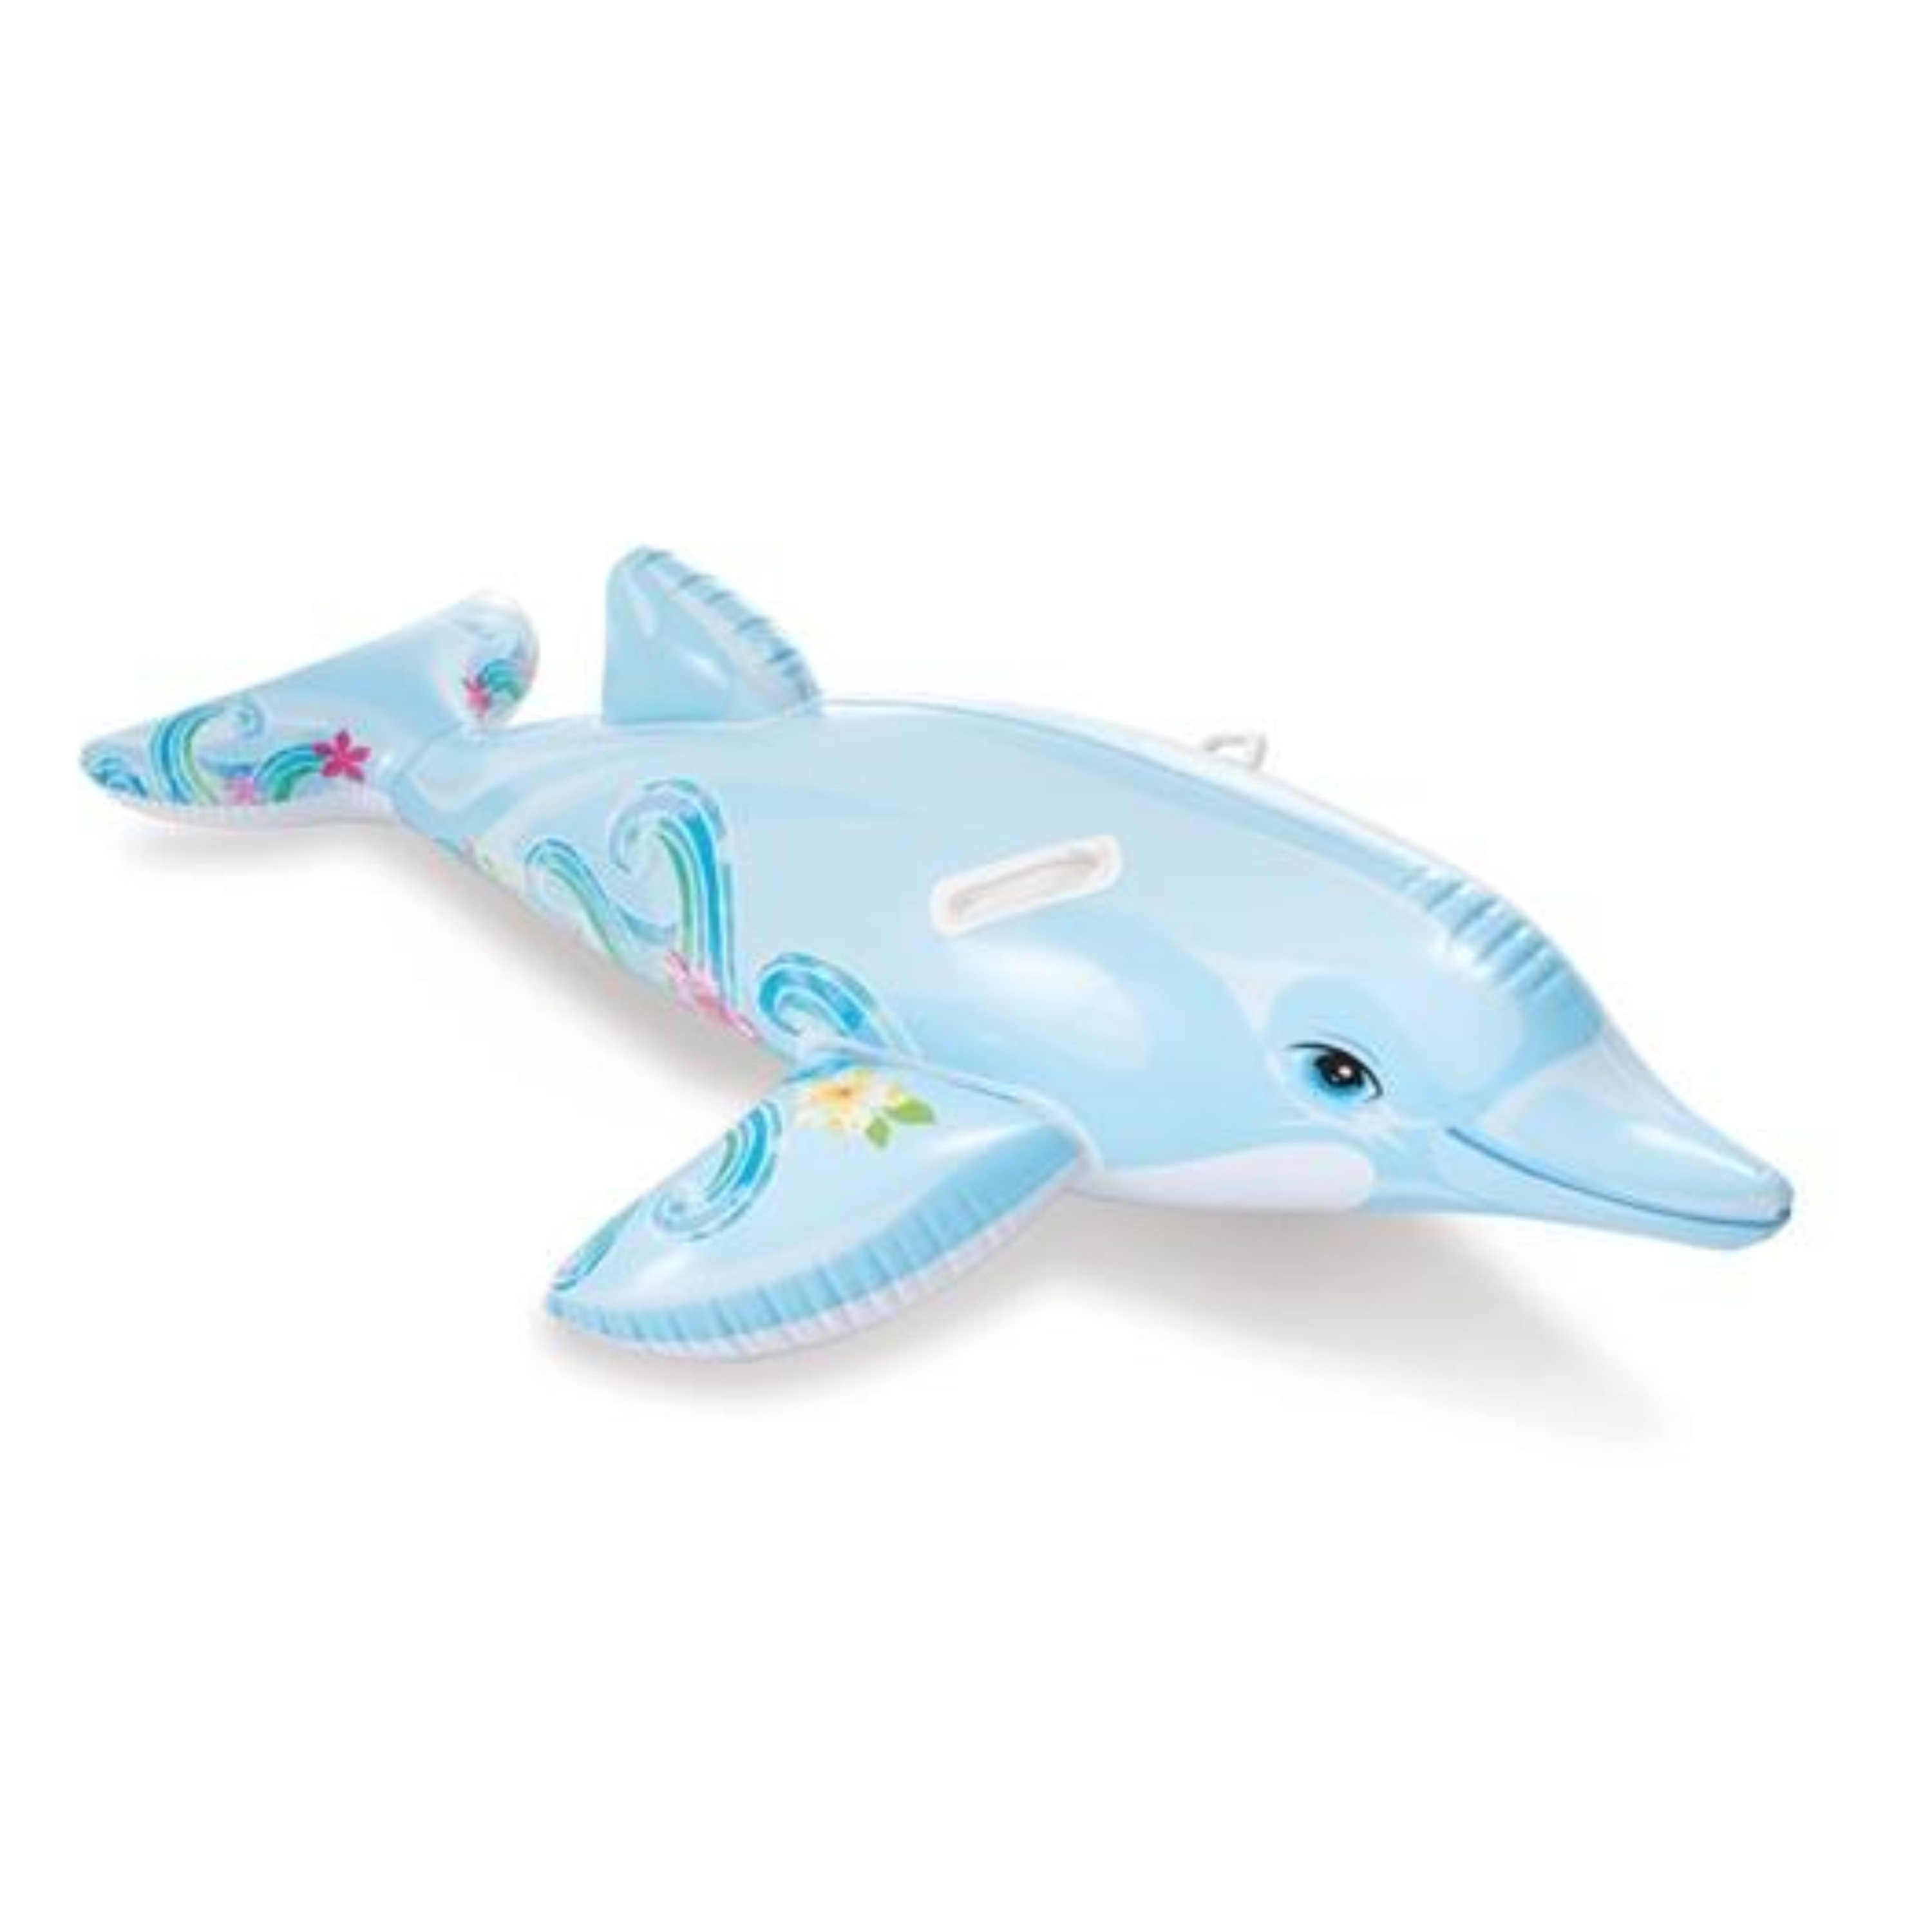 Intex opblaasbare dolfijn 175 cm ride-on speelgoed